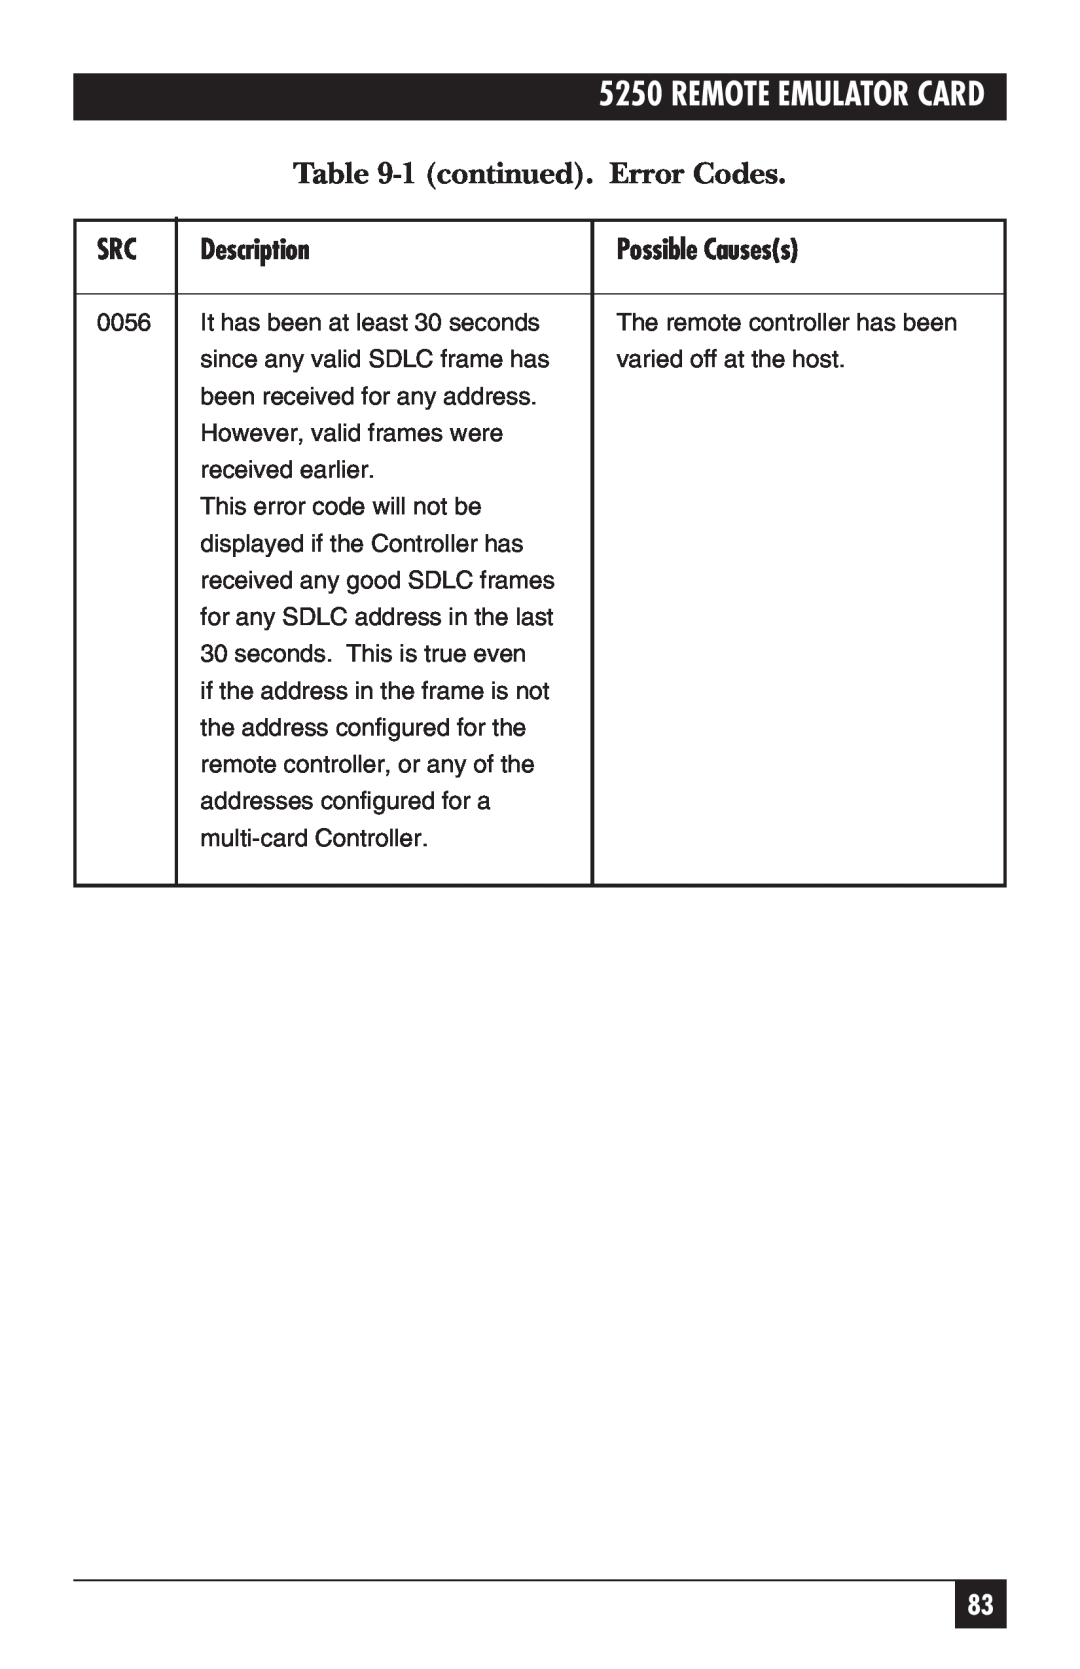 Black Box Remote Emulator Card, 5250 manual Description, Possible Causess, 0056 